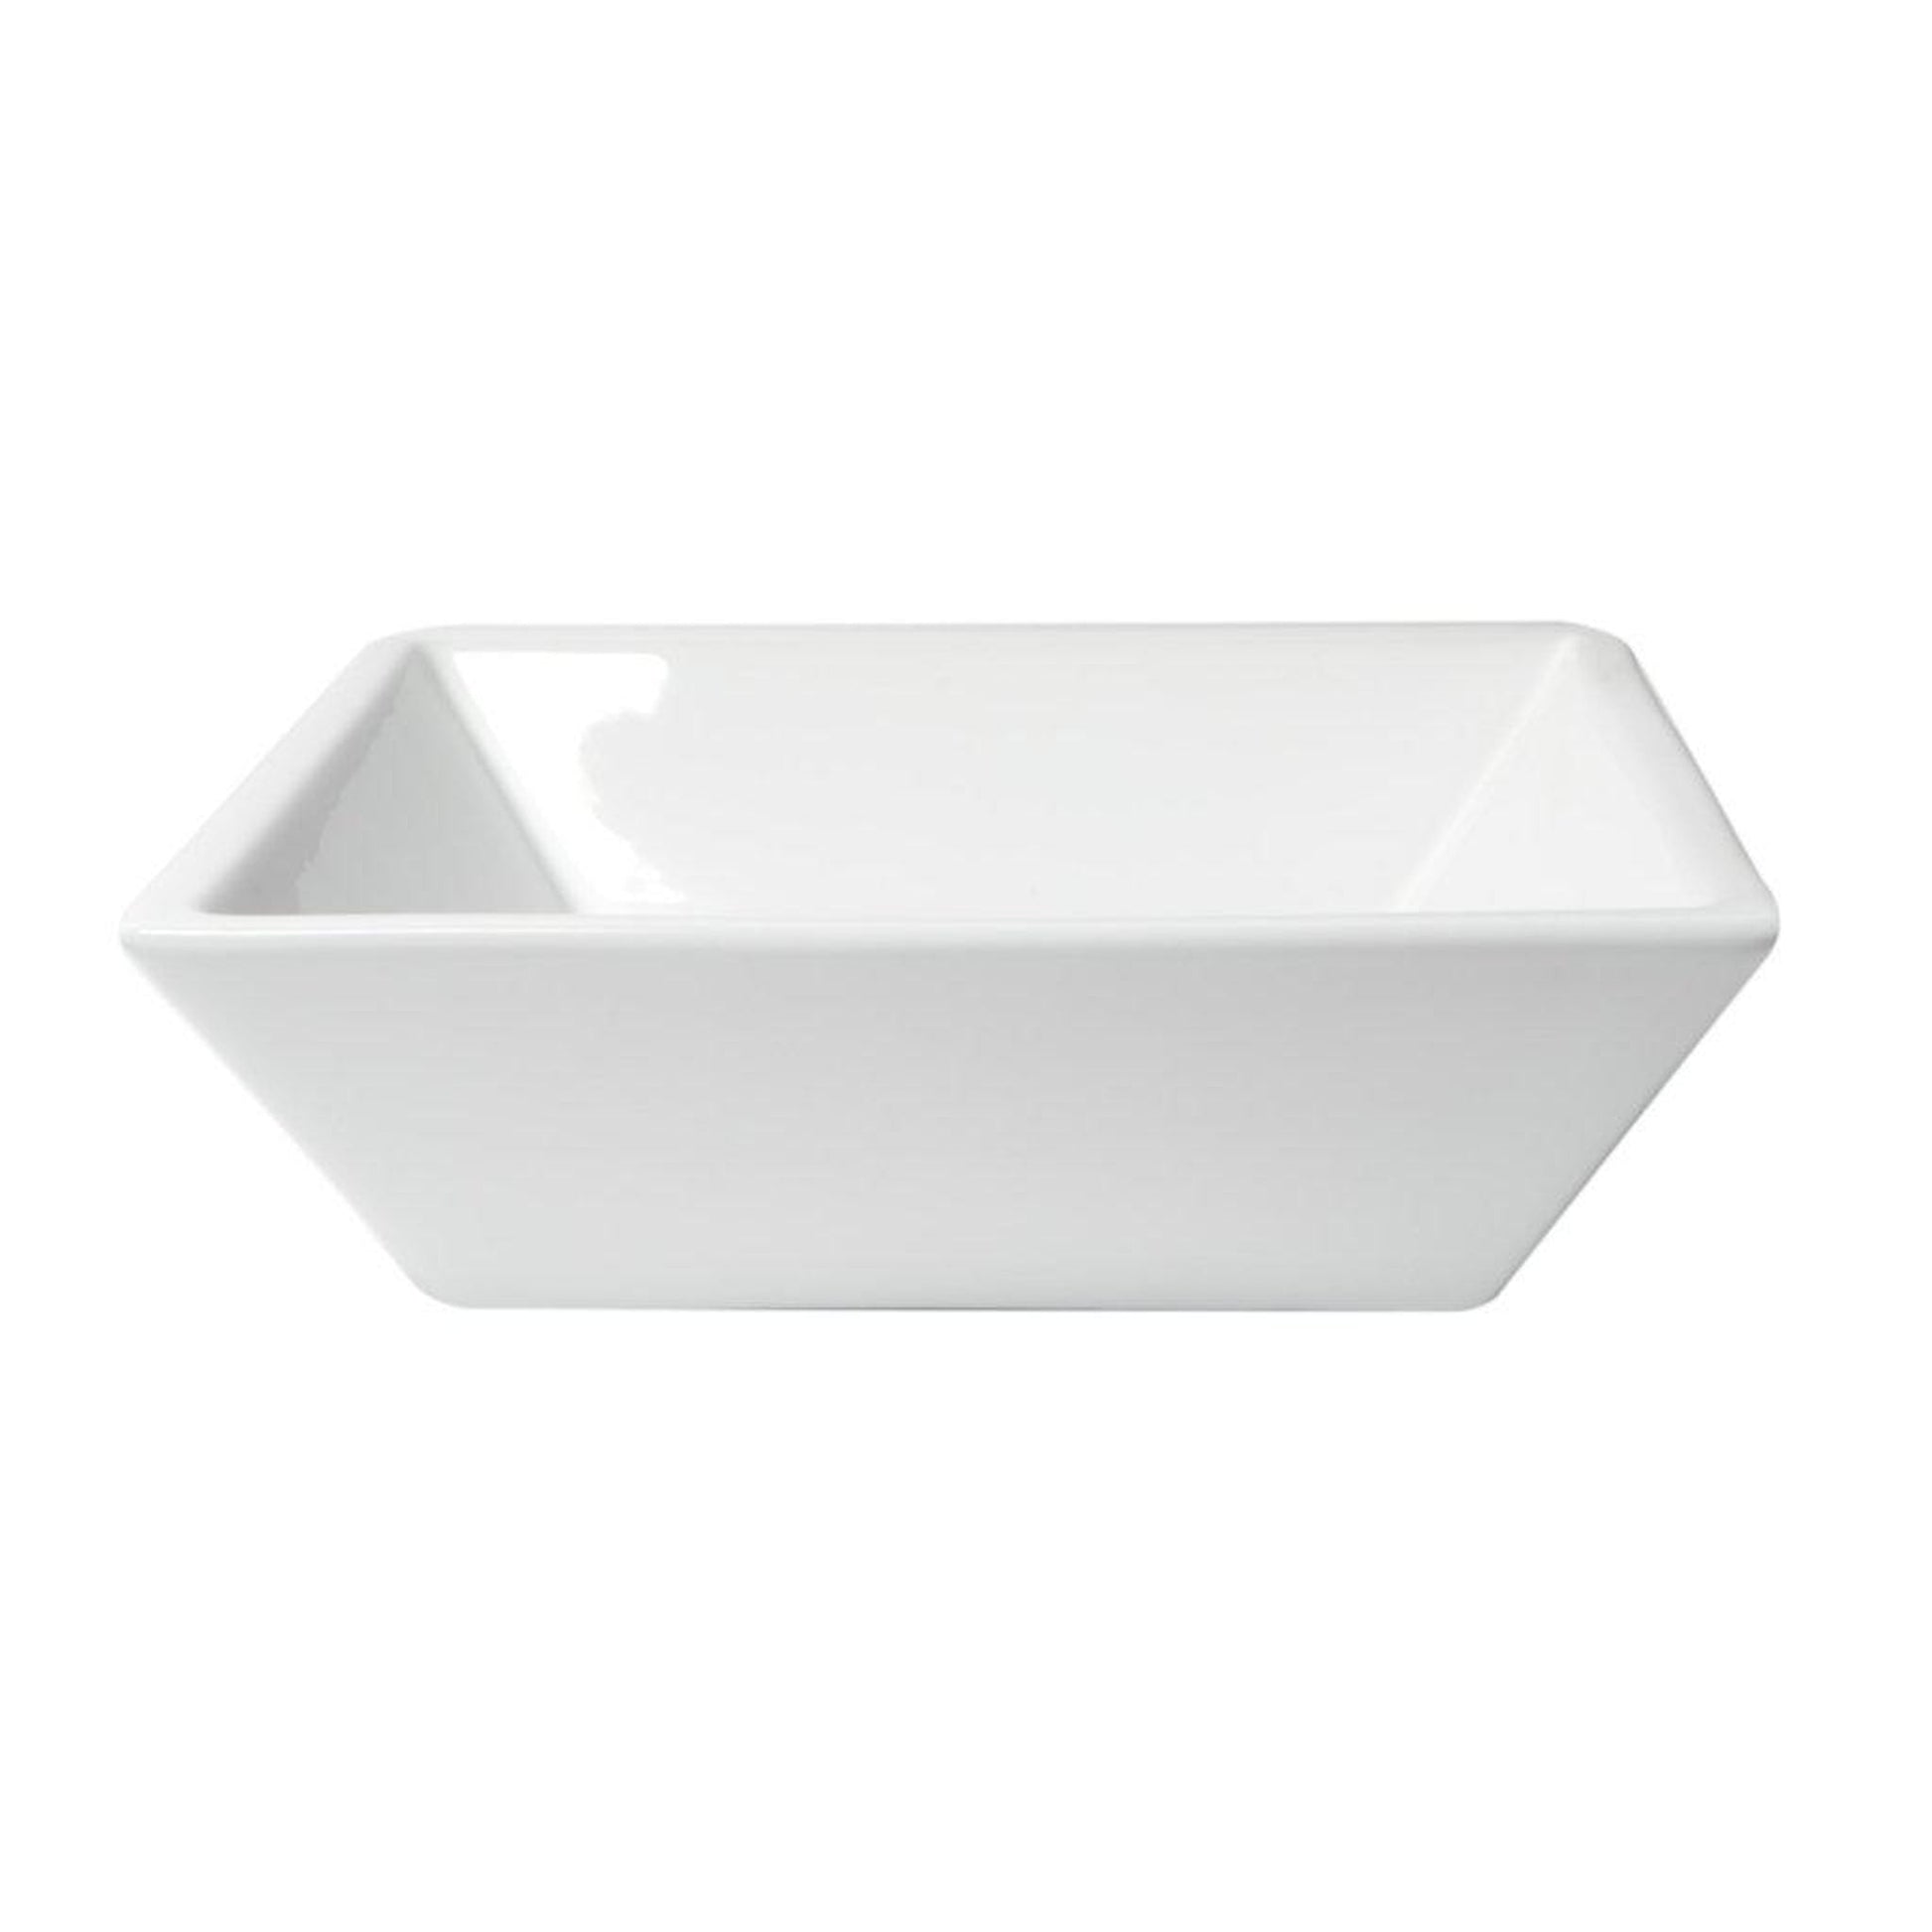 ALFI Brand ABC912 17" White Above Mount Square Ceramic Bathroom Sink